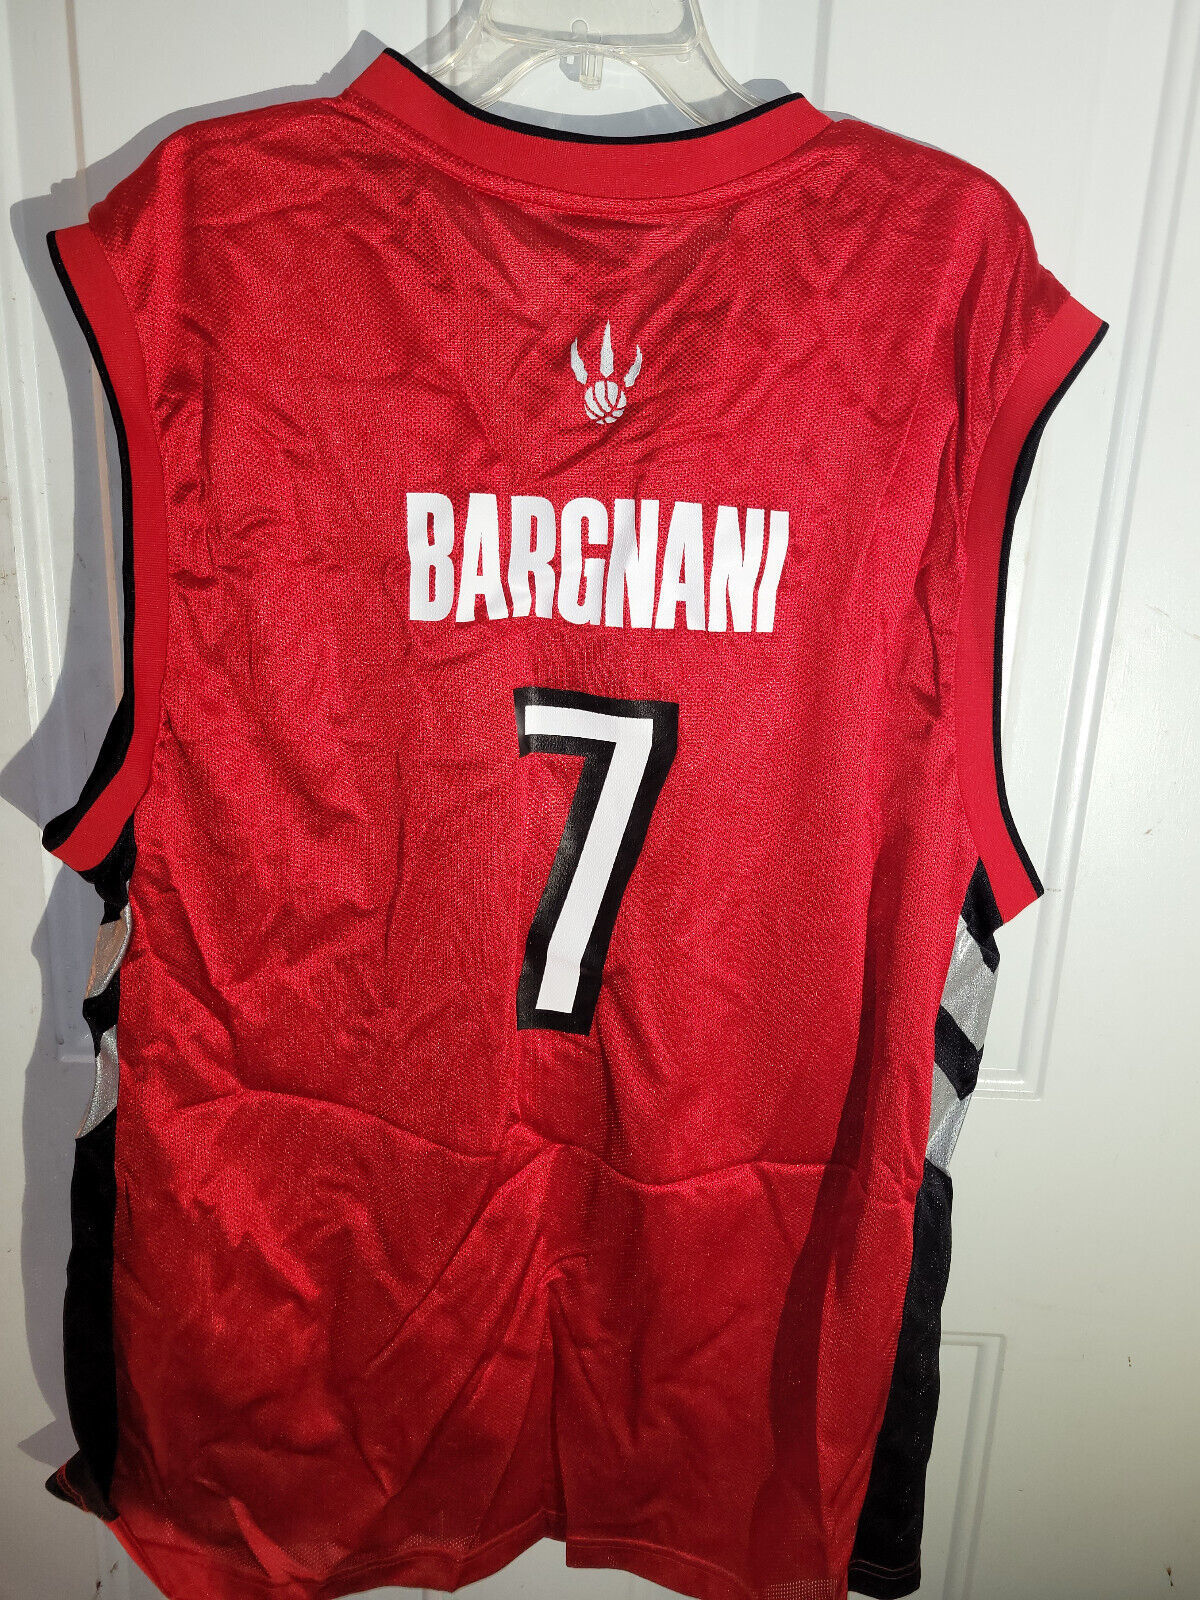 Primary image for Adidas NBA Jersey Retro Toronto Raptors Andrea Bargnani Red sz XL